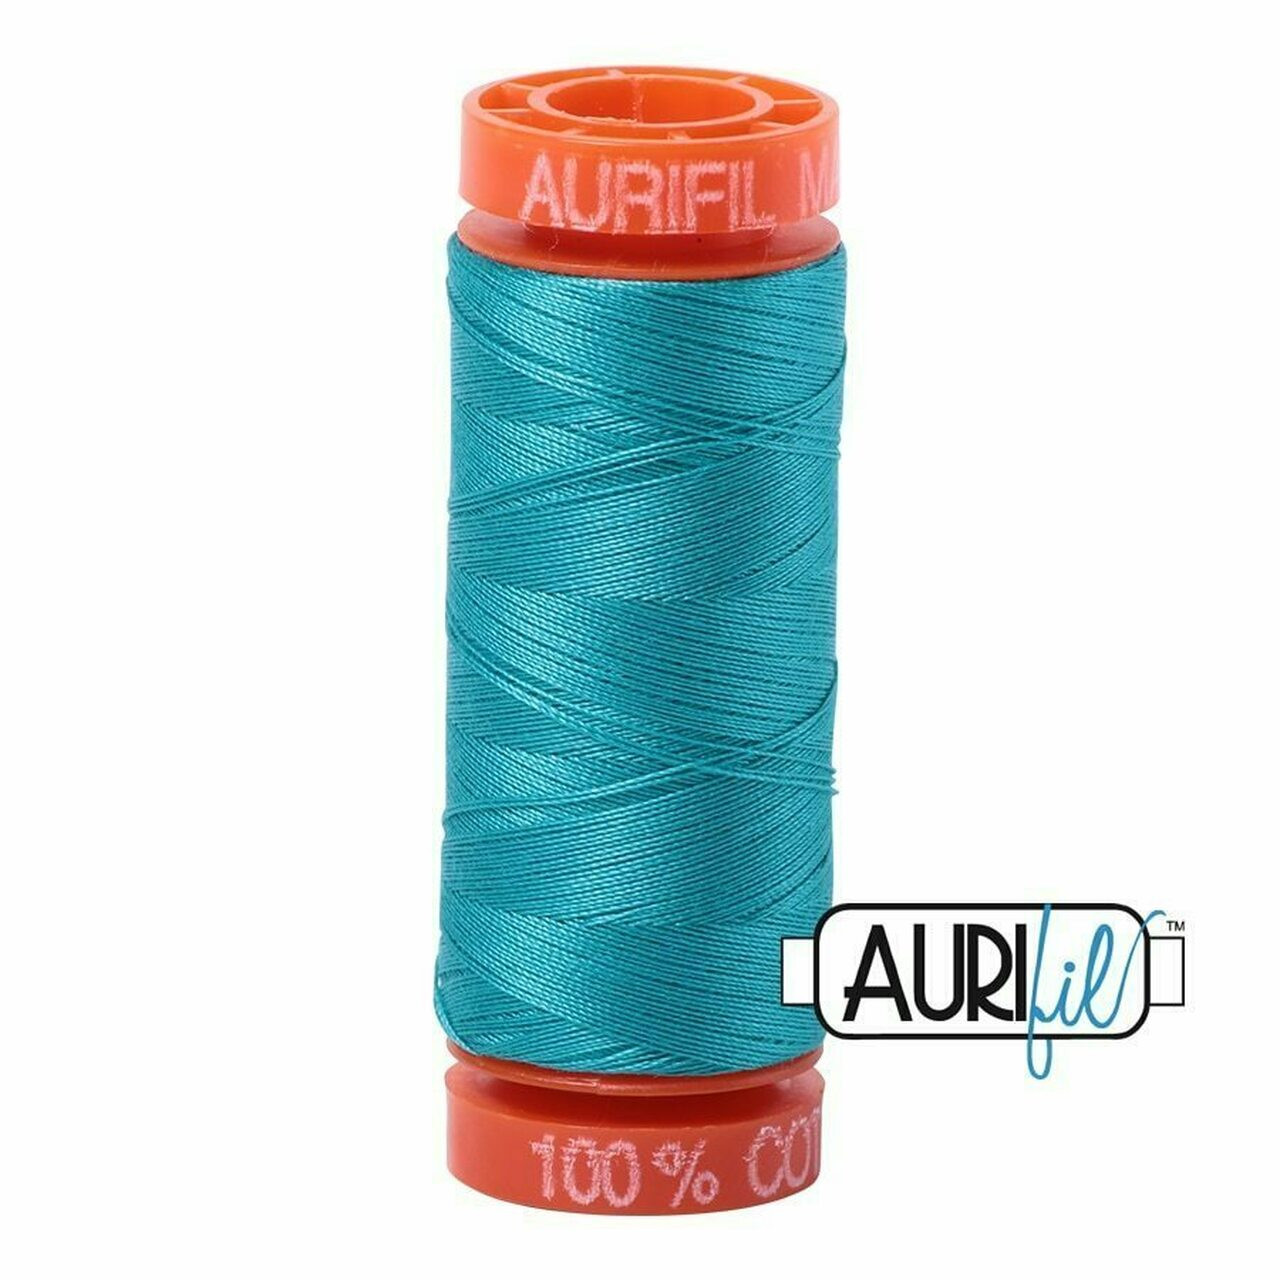 Aurifil 2810 - Turquoise